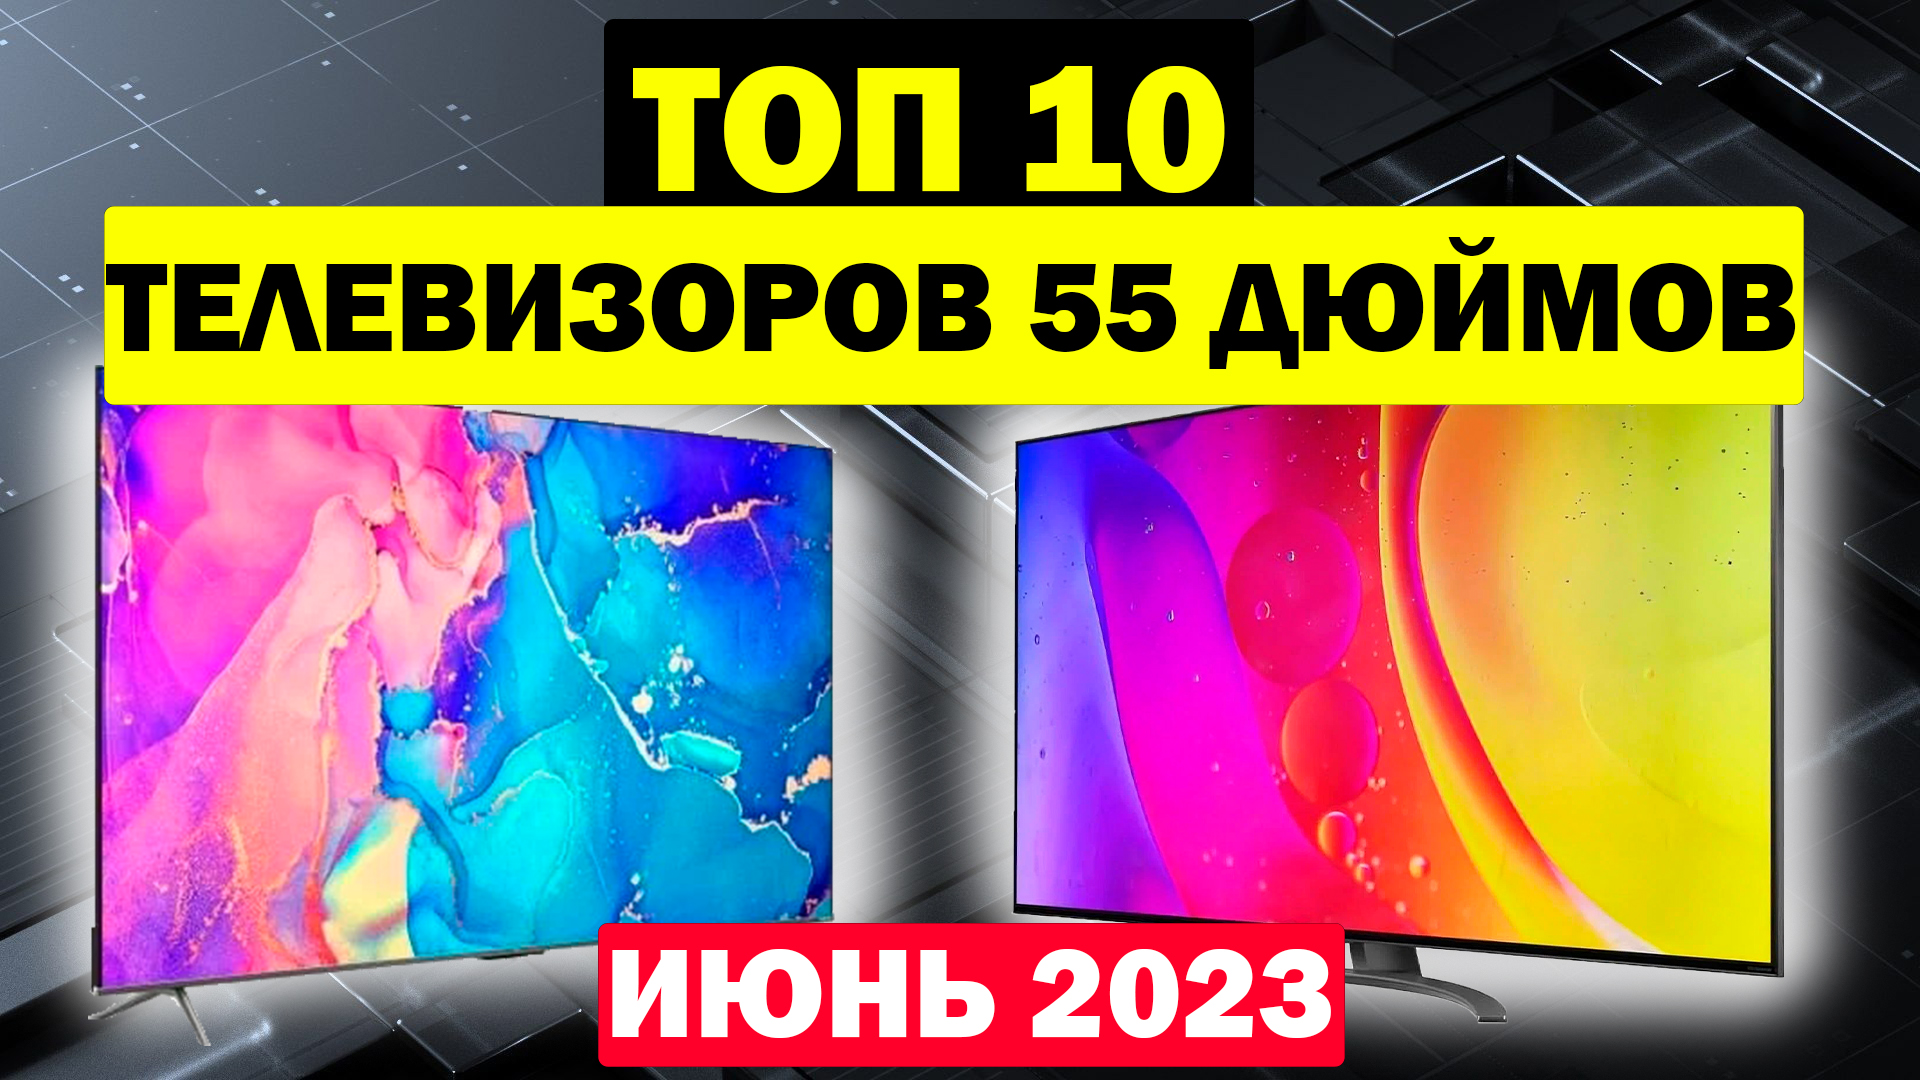 Hisense TV 2023. Телевизор Хеннесси 55 дюймов. Телевизоры 55 дюймов рейтинг цена качество. Телеком 21 хороший интернет. Топ телевизор 2023 года